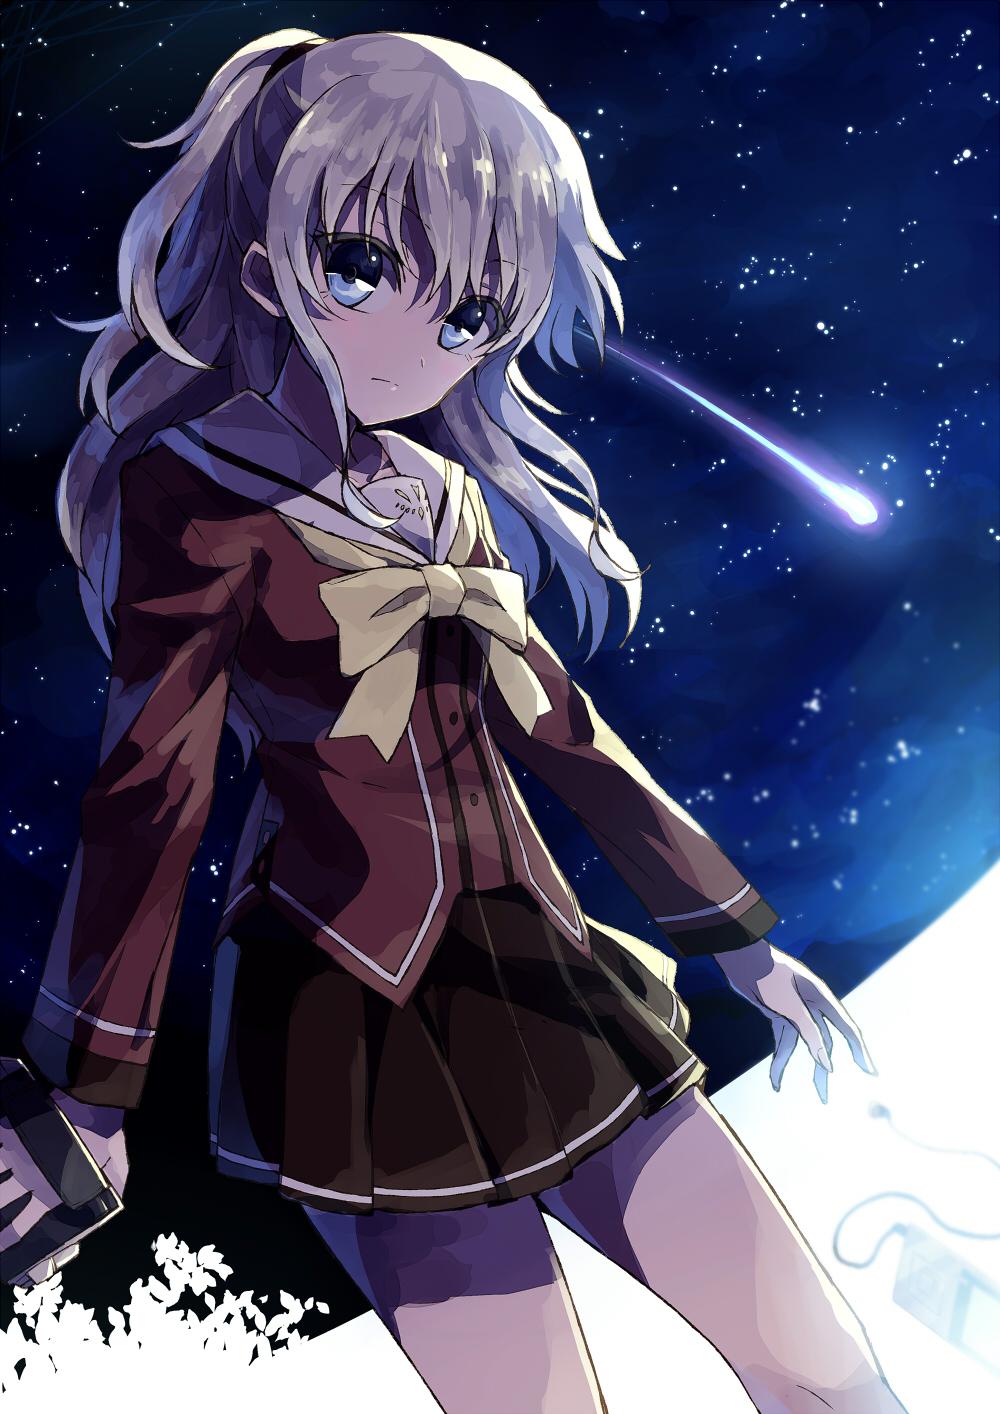 Tomori Nao (Series) Anime Image Board